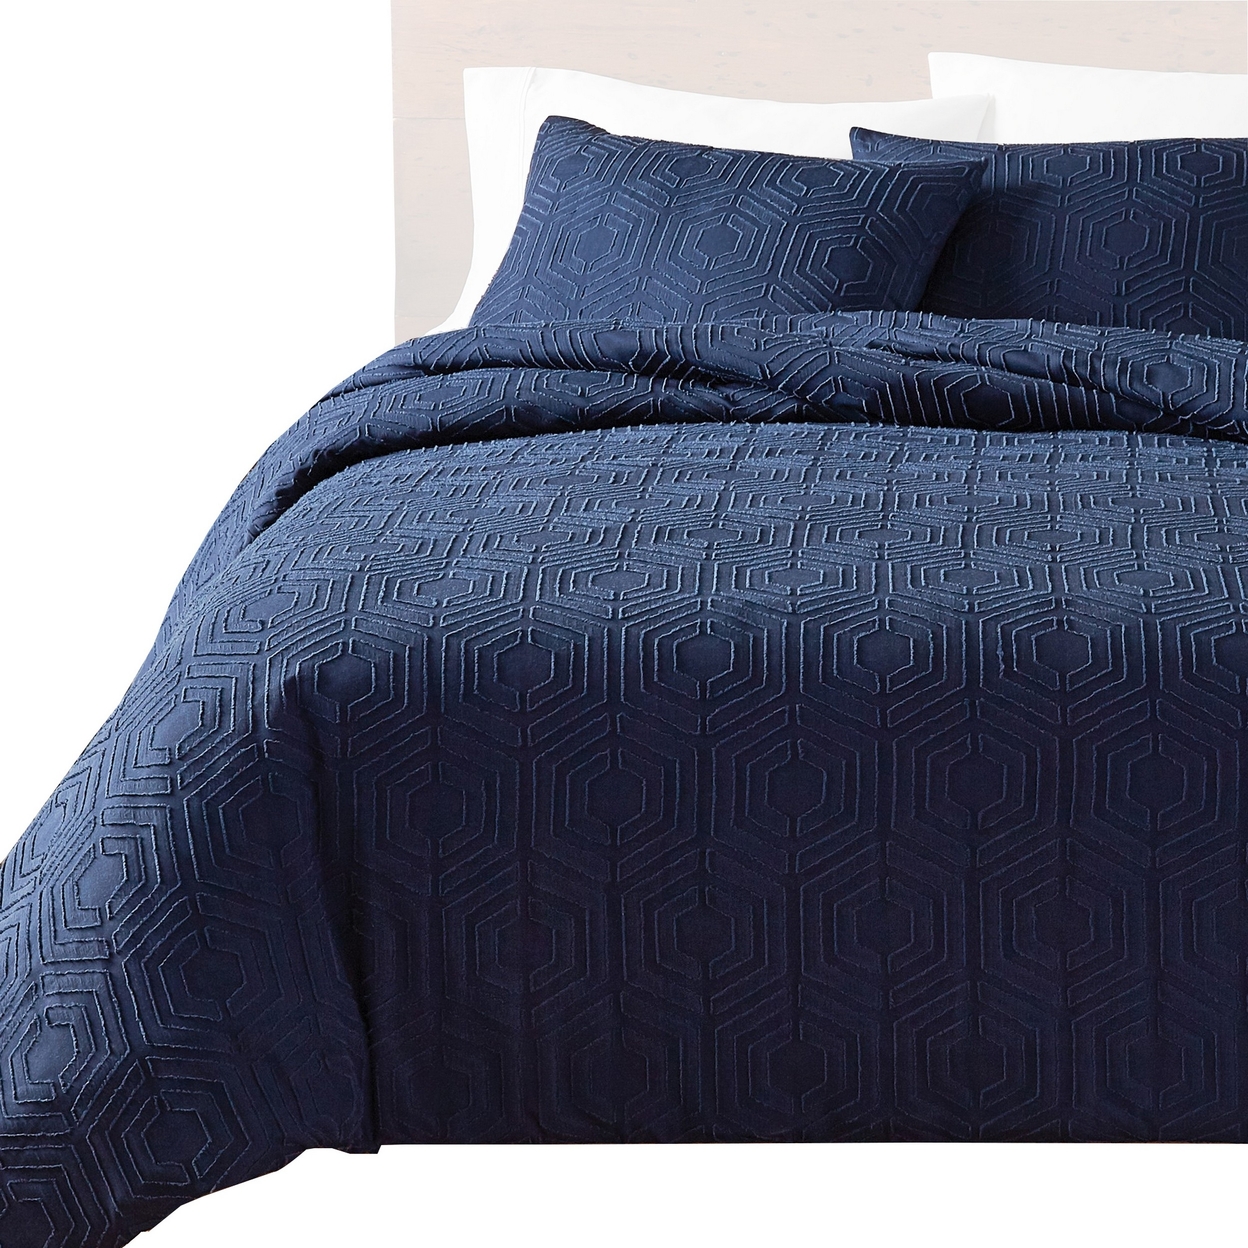 Jose 3 Piece Queen Size Comforter Set, Matching Shams, Jacquard Navy Blue - Saltoro Sherpi